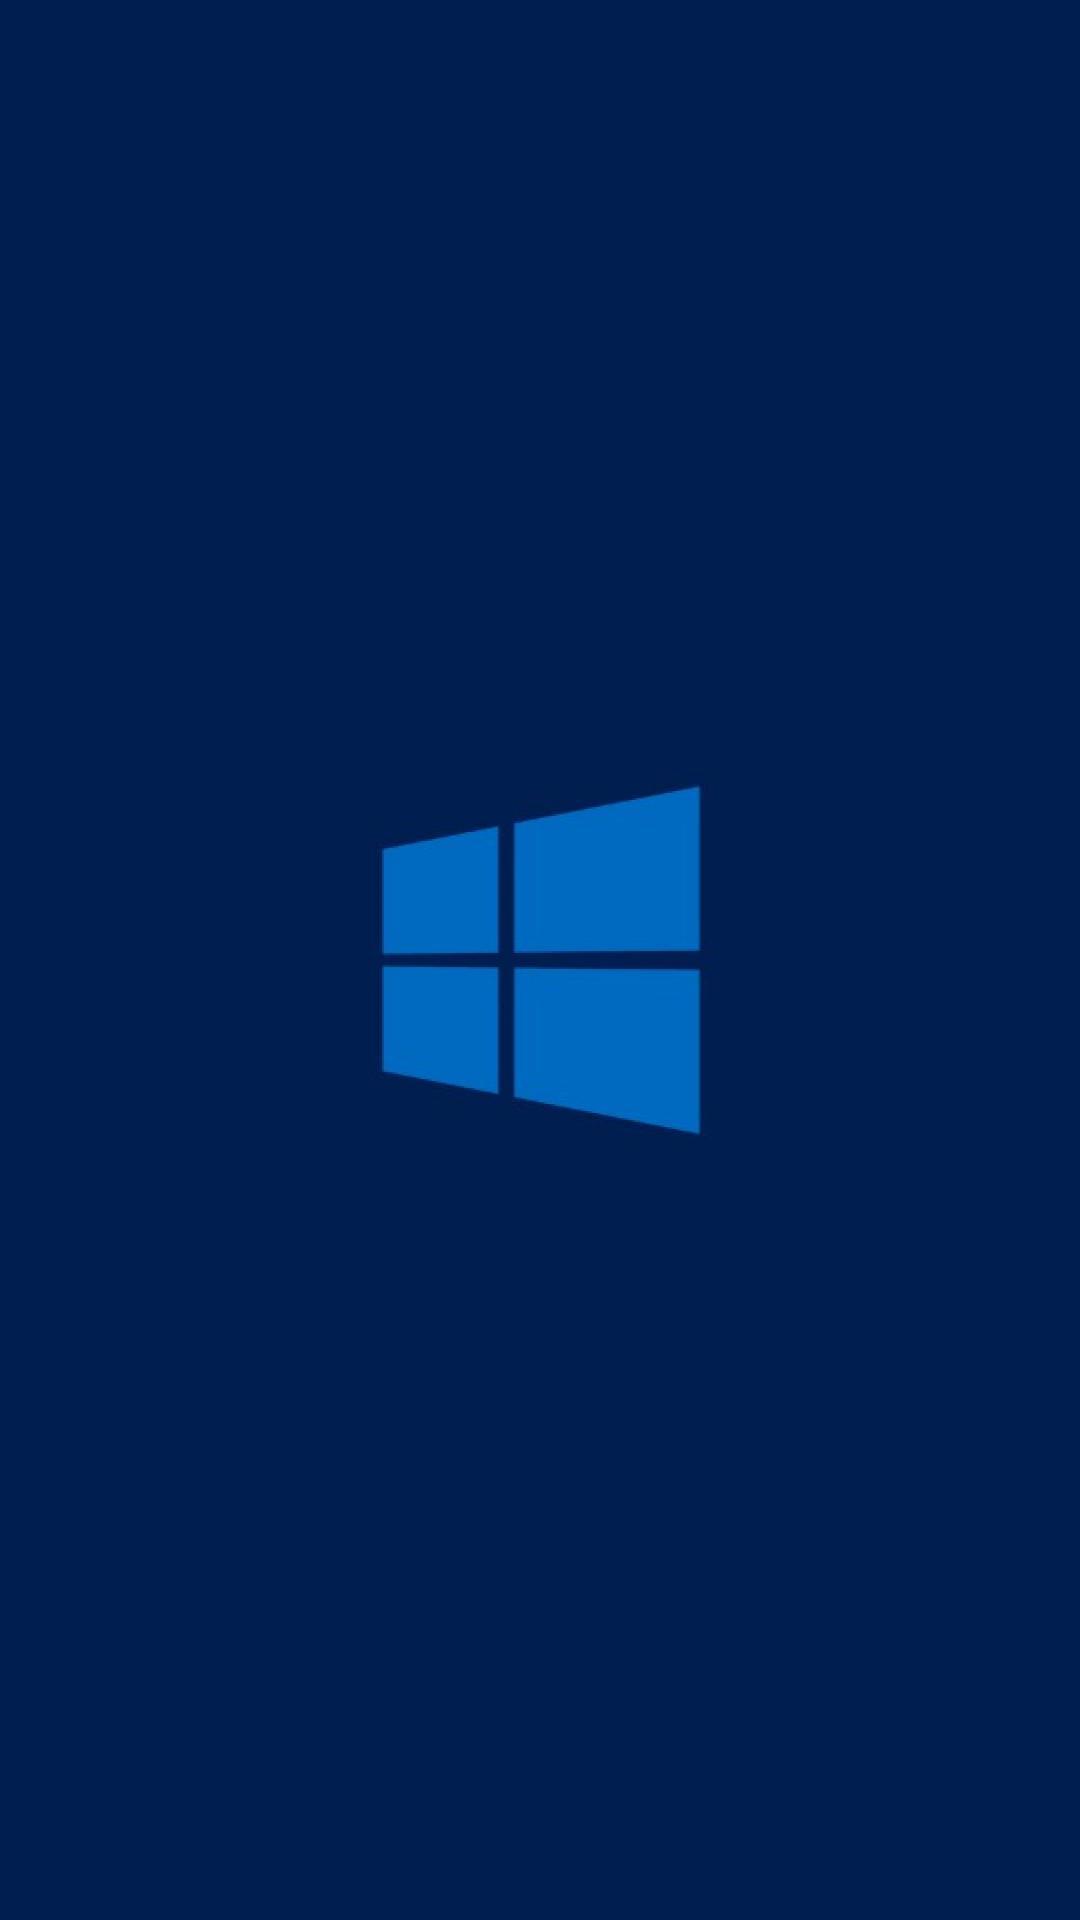 Windows 10 Logo Wallpapers Group